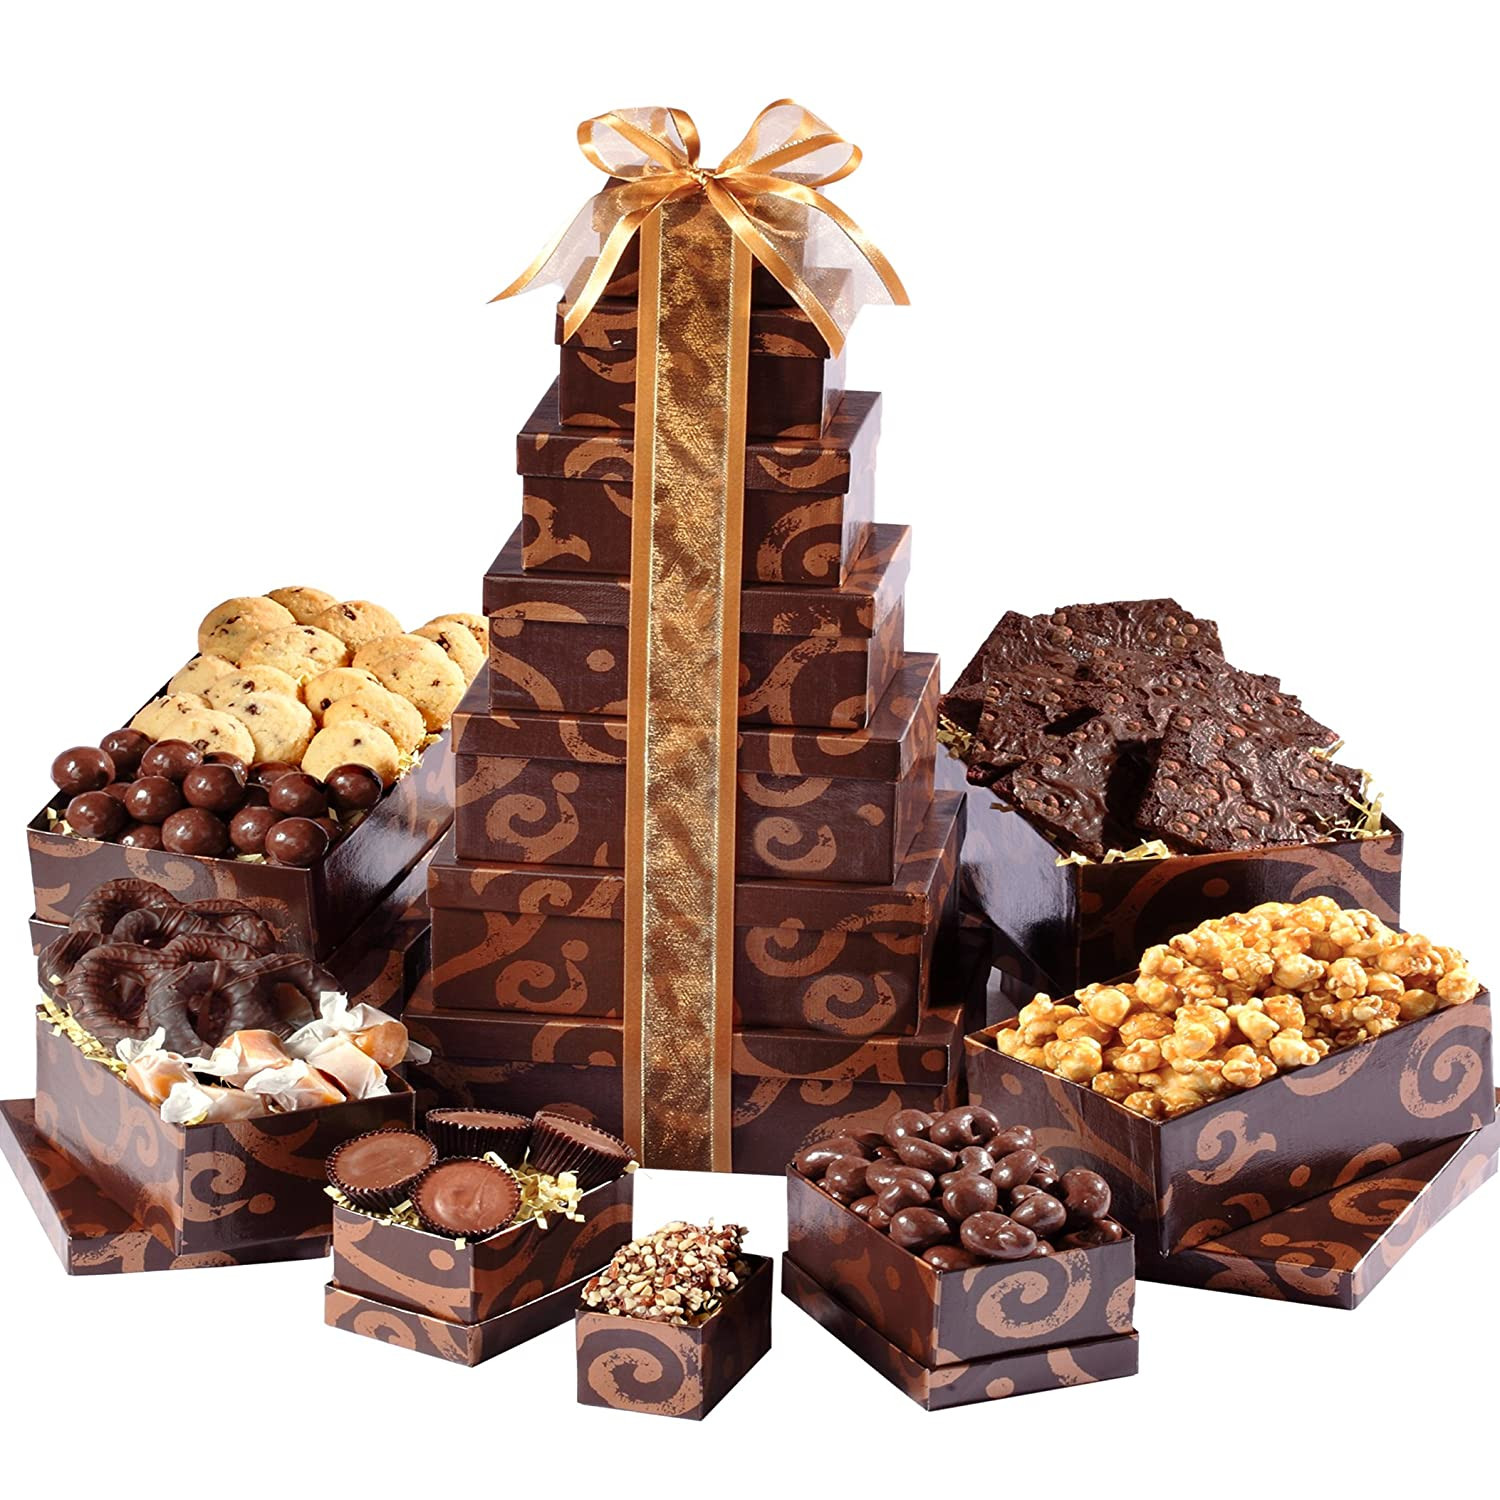 Chocolate Gift Baskets Ideas
 Chocolate Gift Baskets